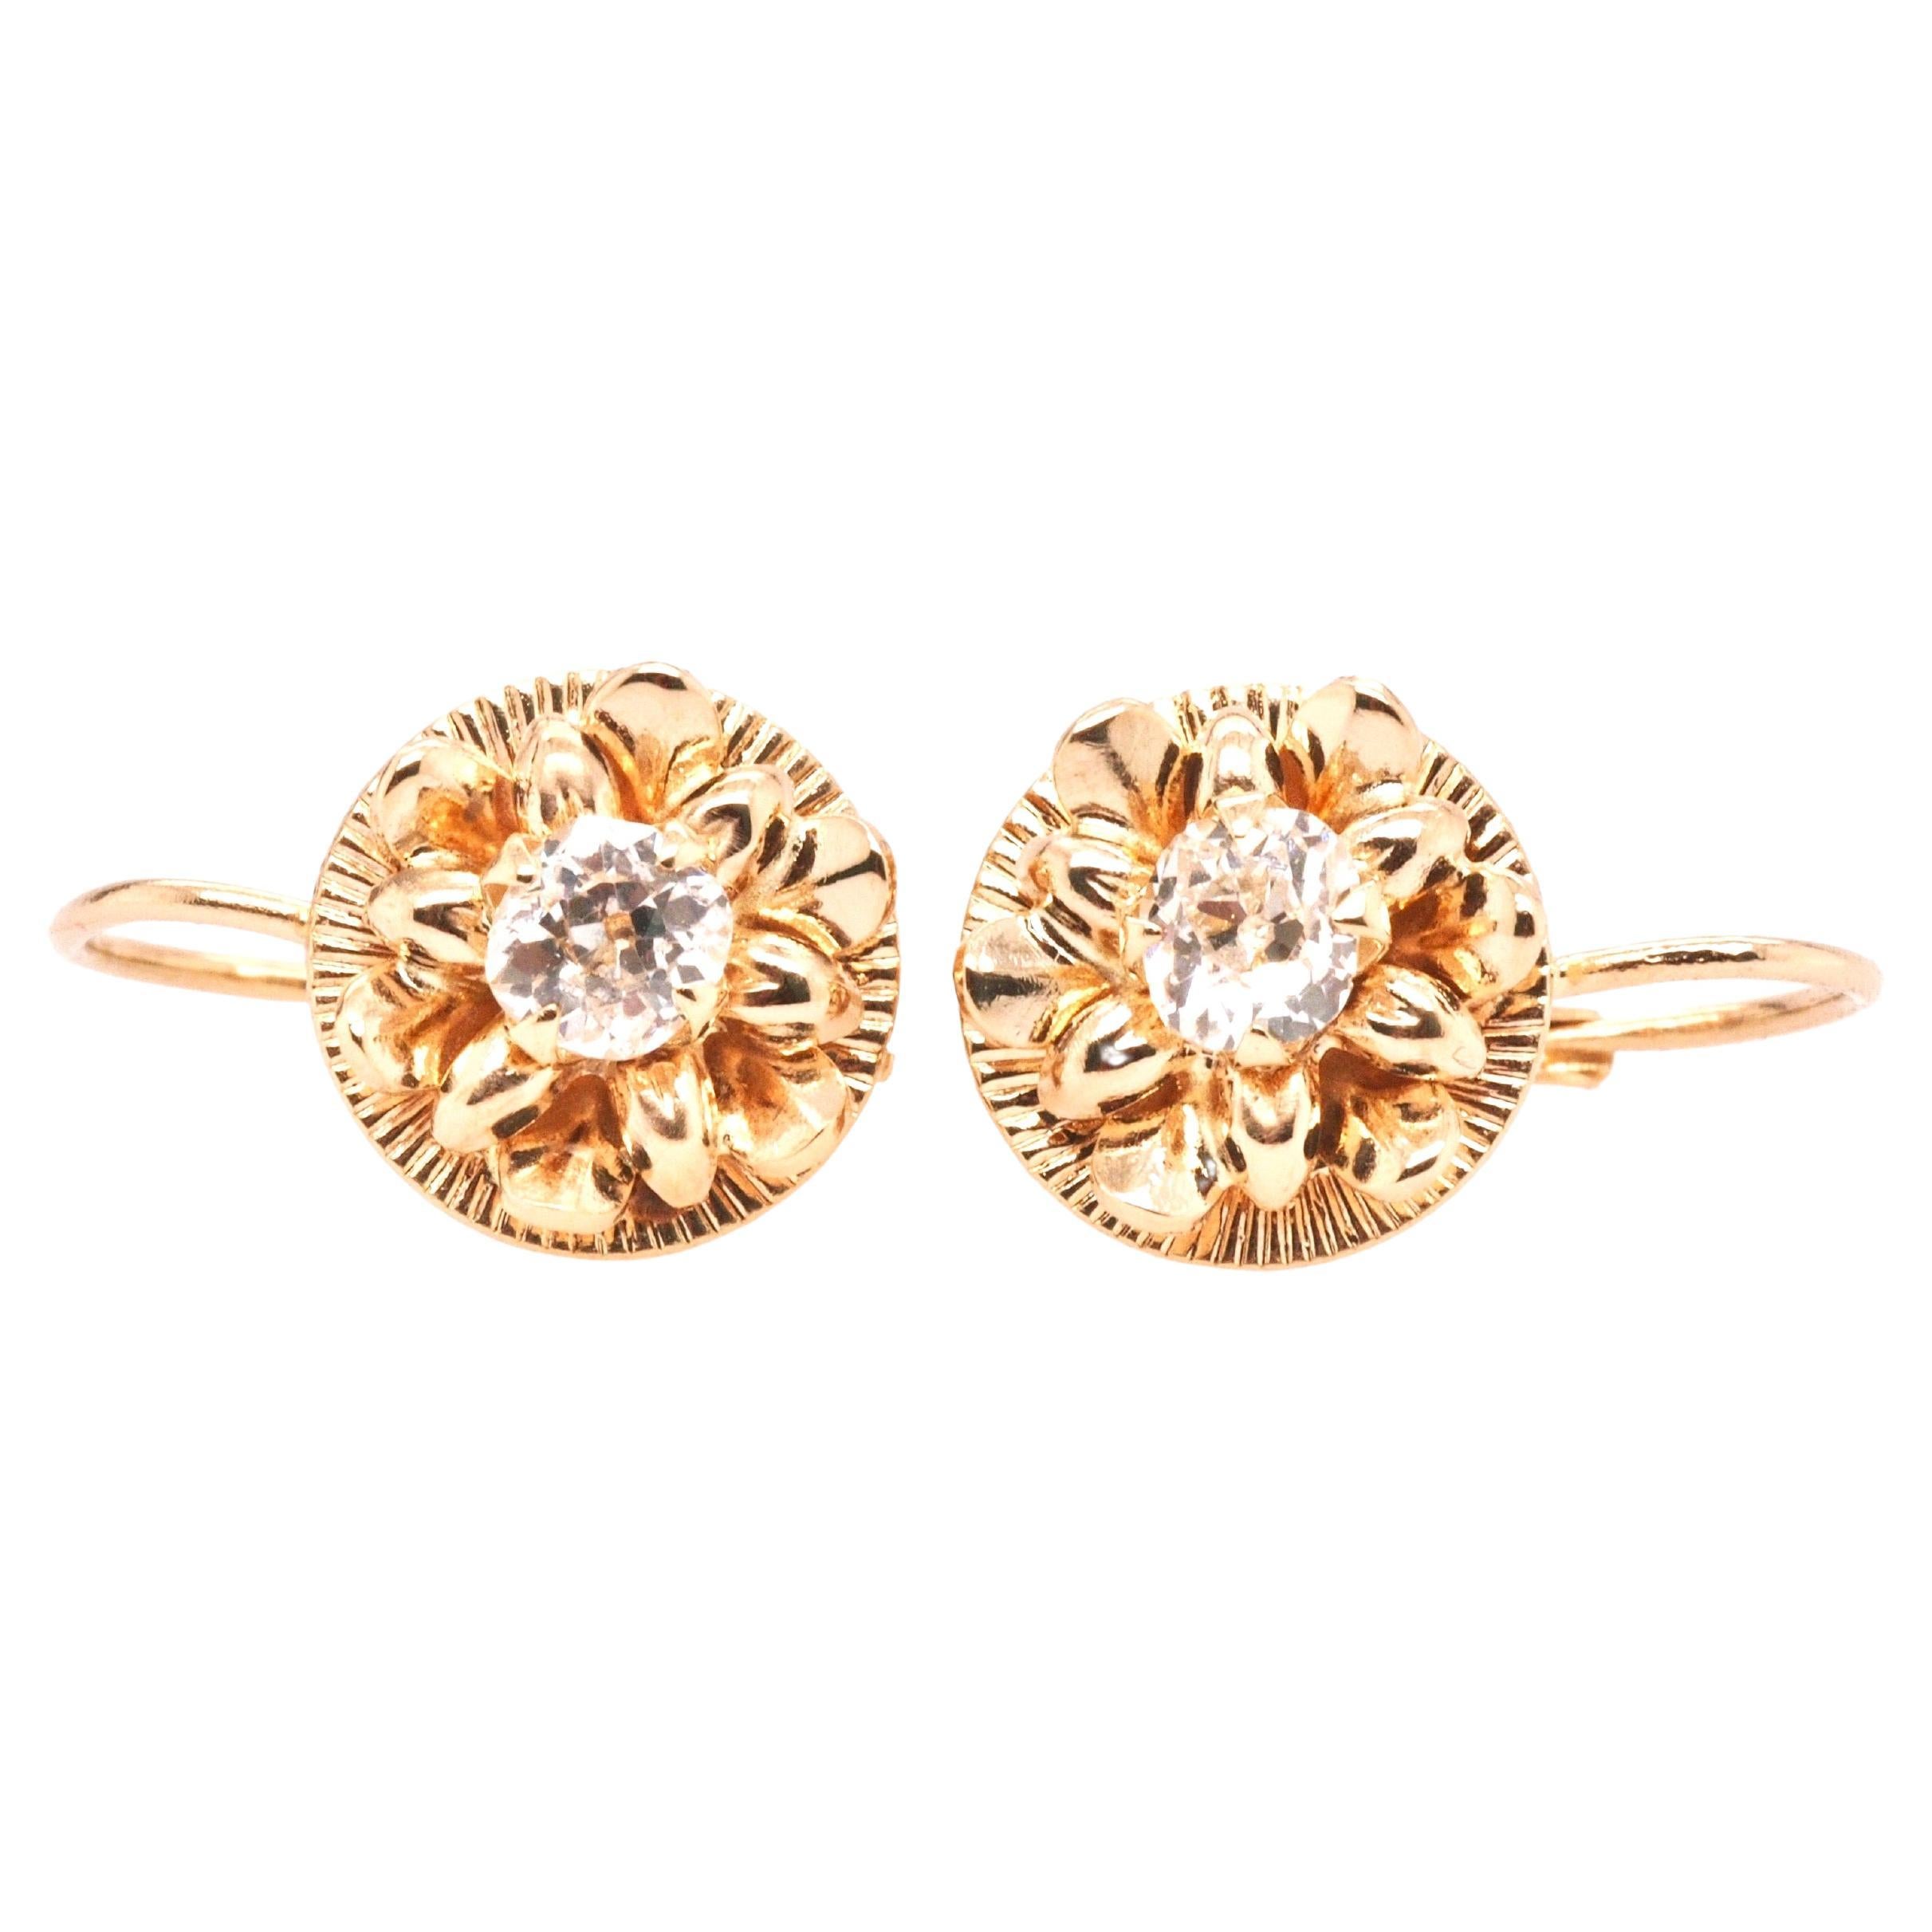 1950 14K Yellow Gold Stud Diamond Earrings